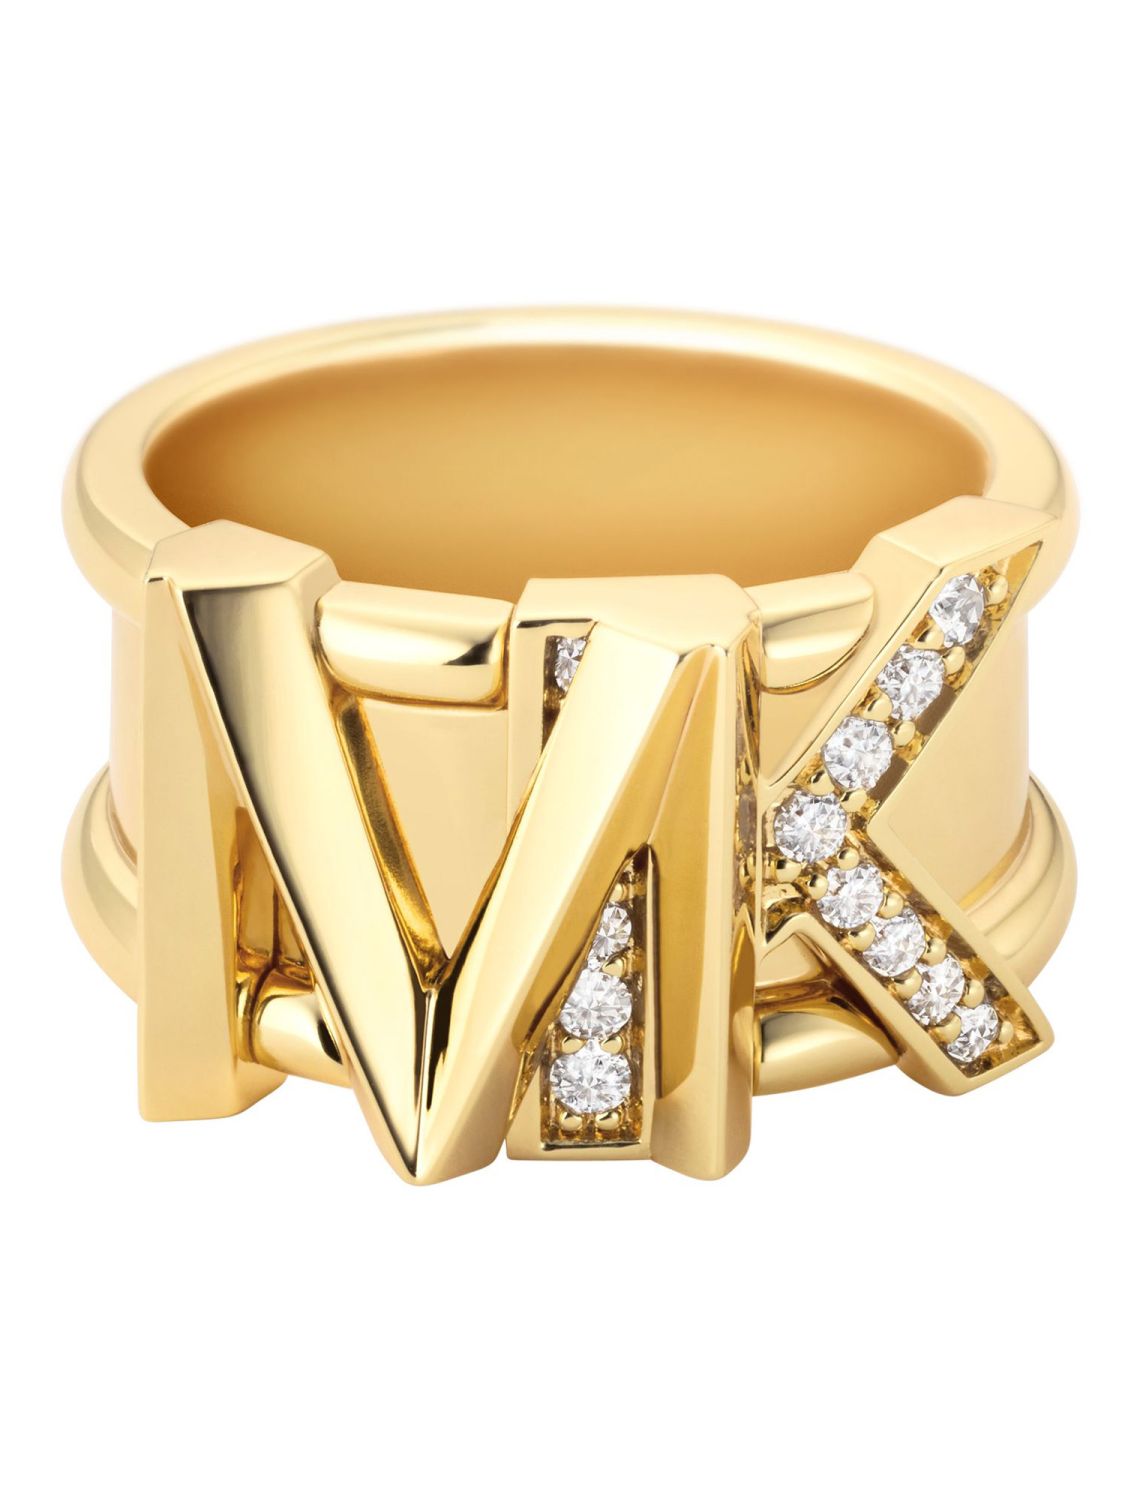 MICHAEL KORS MKJ7836710 Ladies' Ring Gold Tone